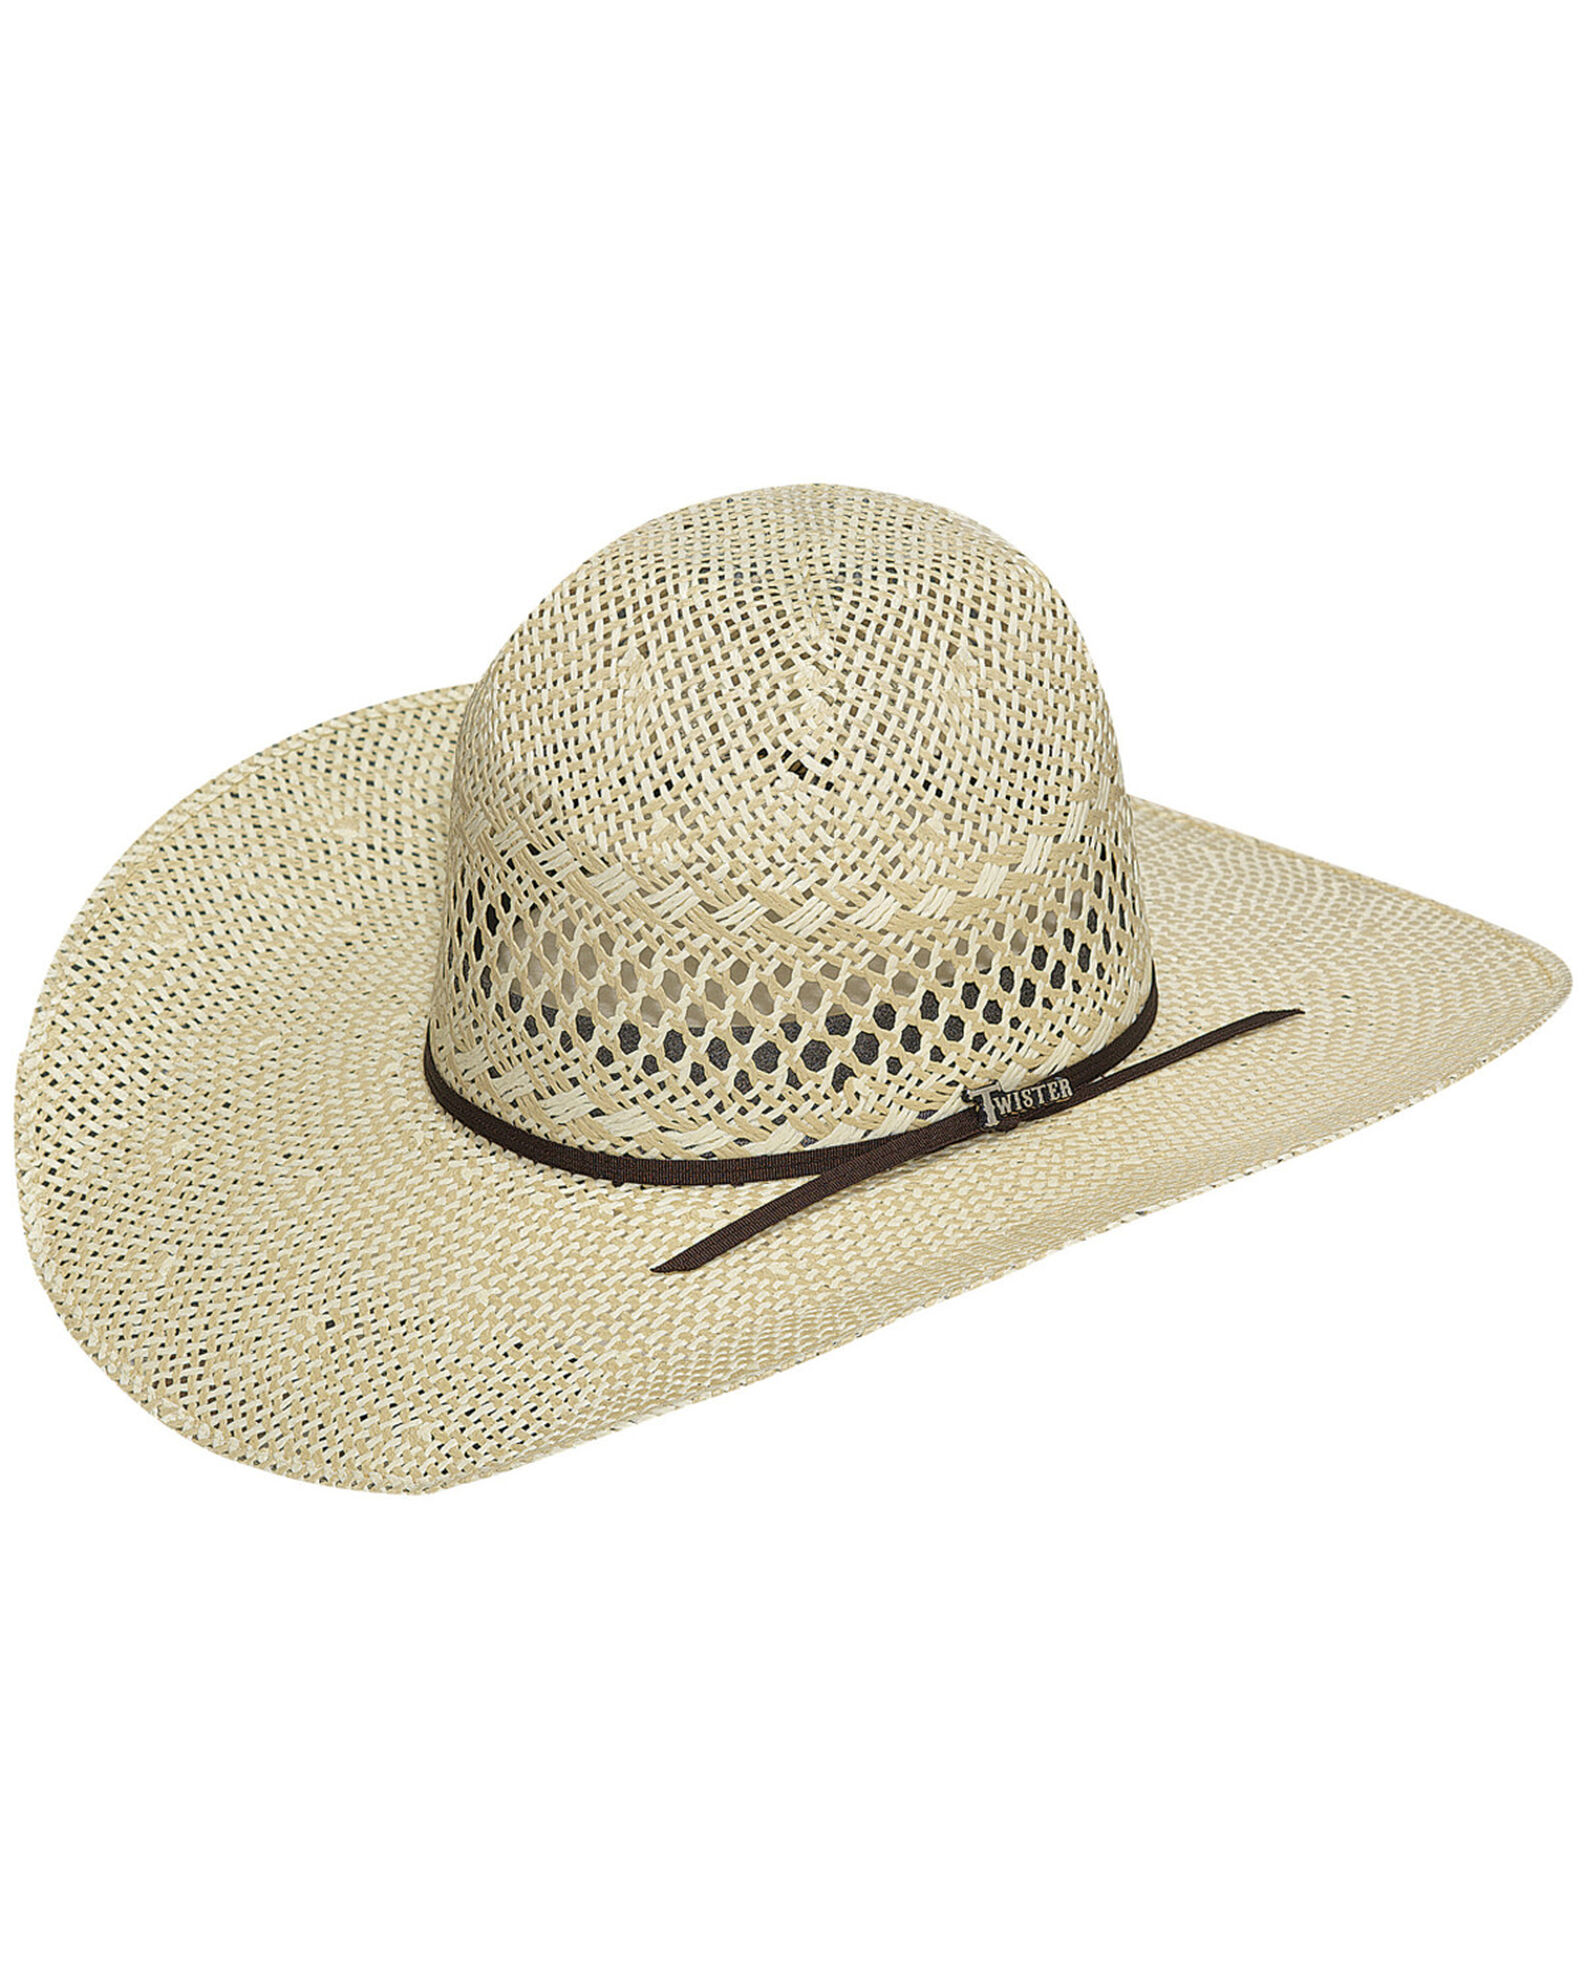 Twister Men's Twisted Weave Straw Cowboy Hat